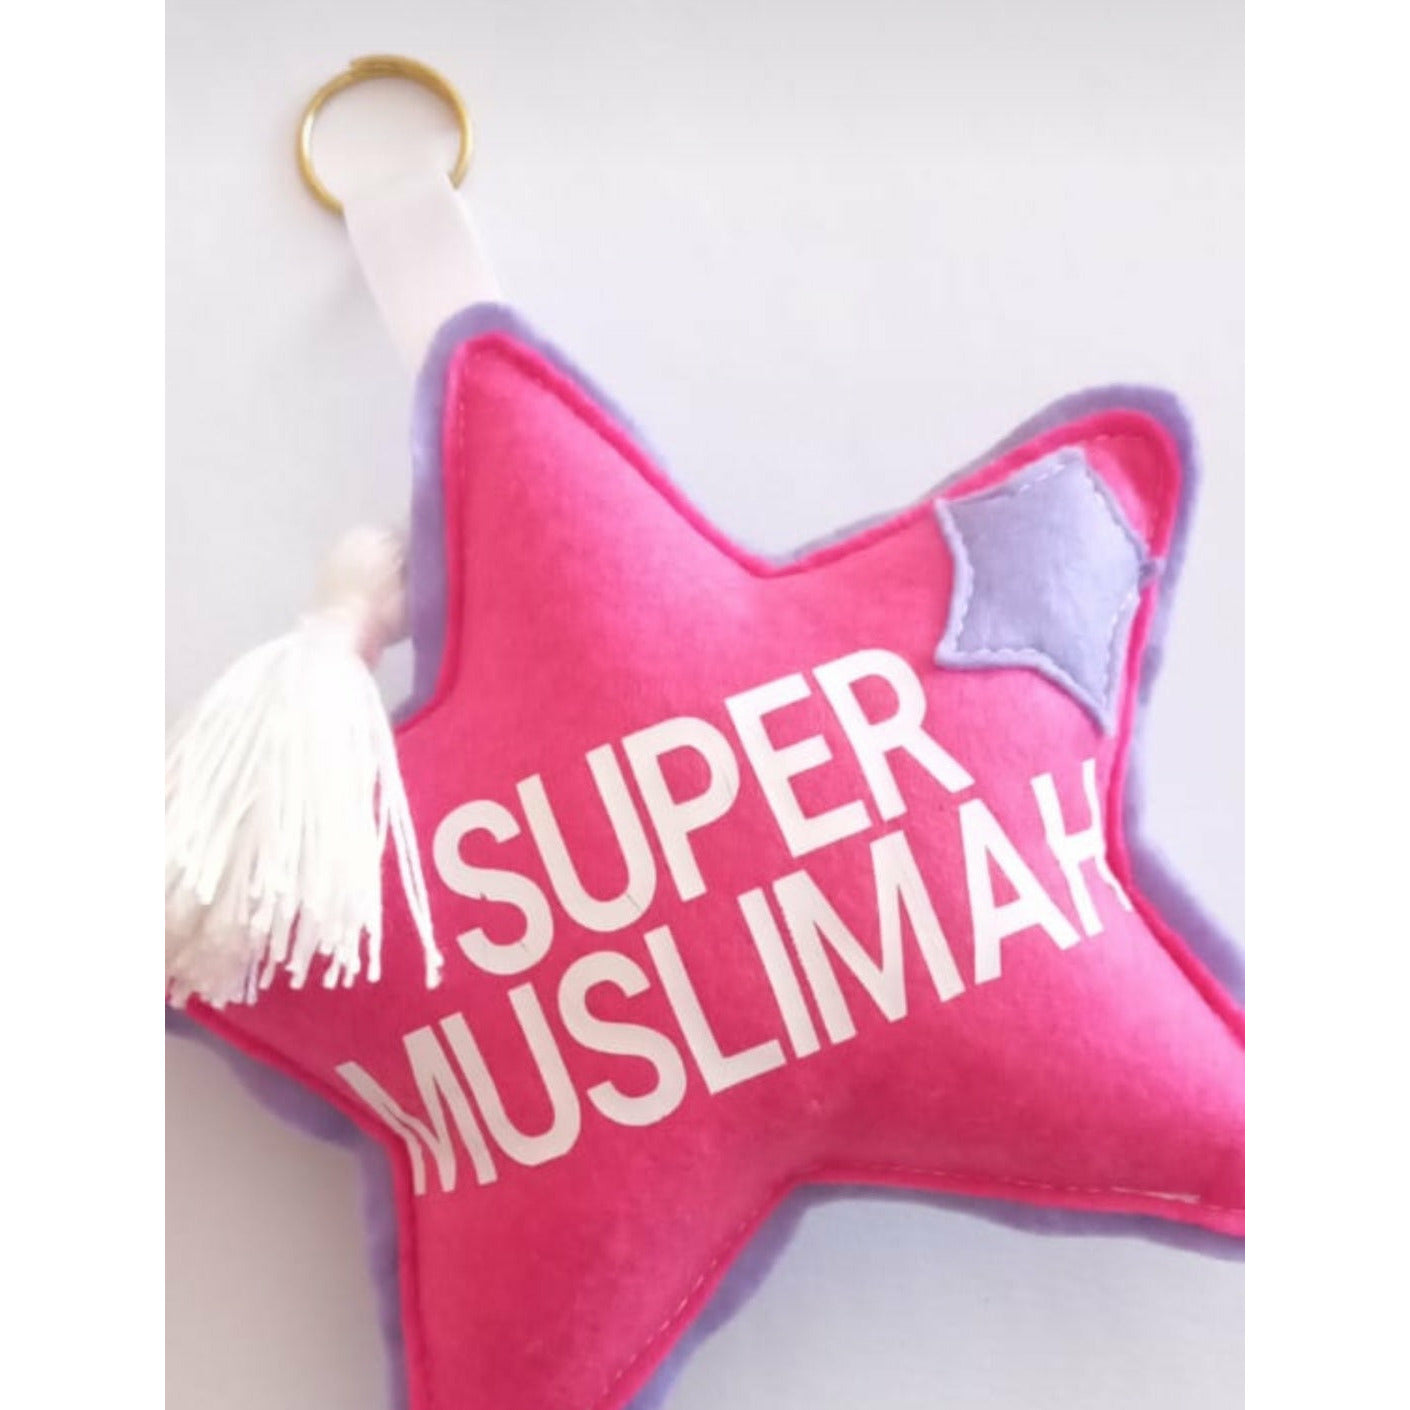 Handmade Super Muslimah Star (With Keepsake Pocket)